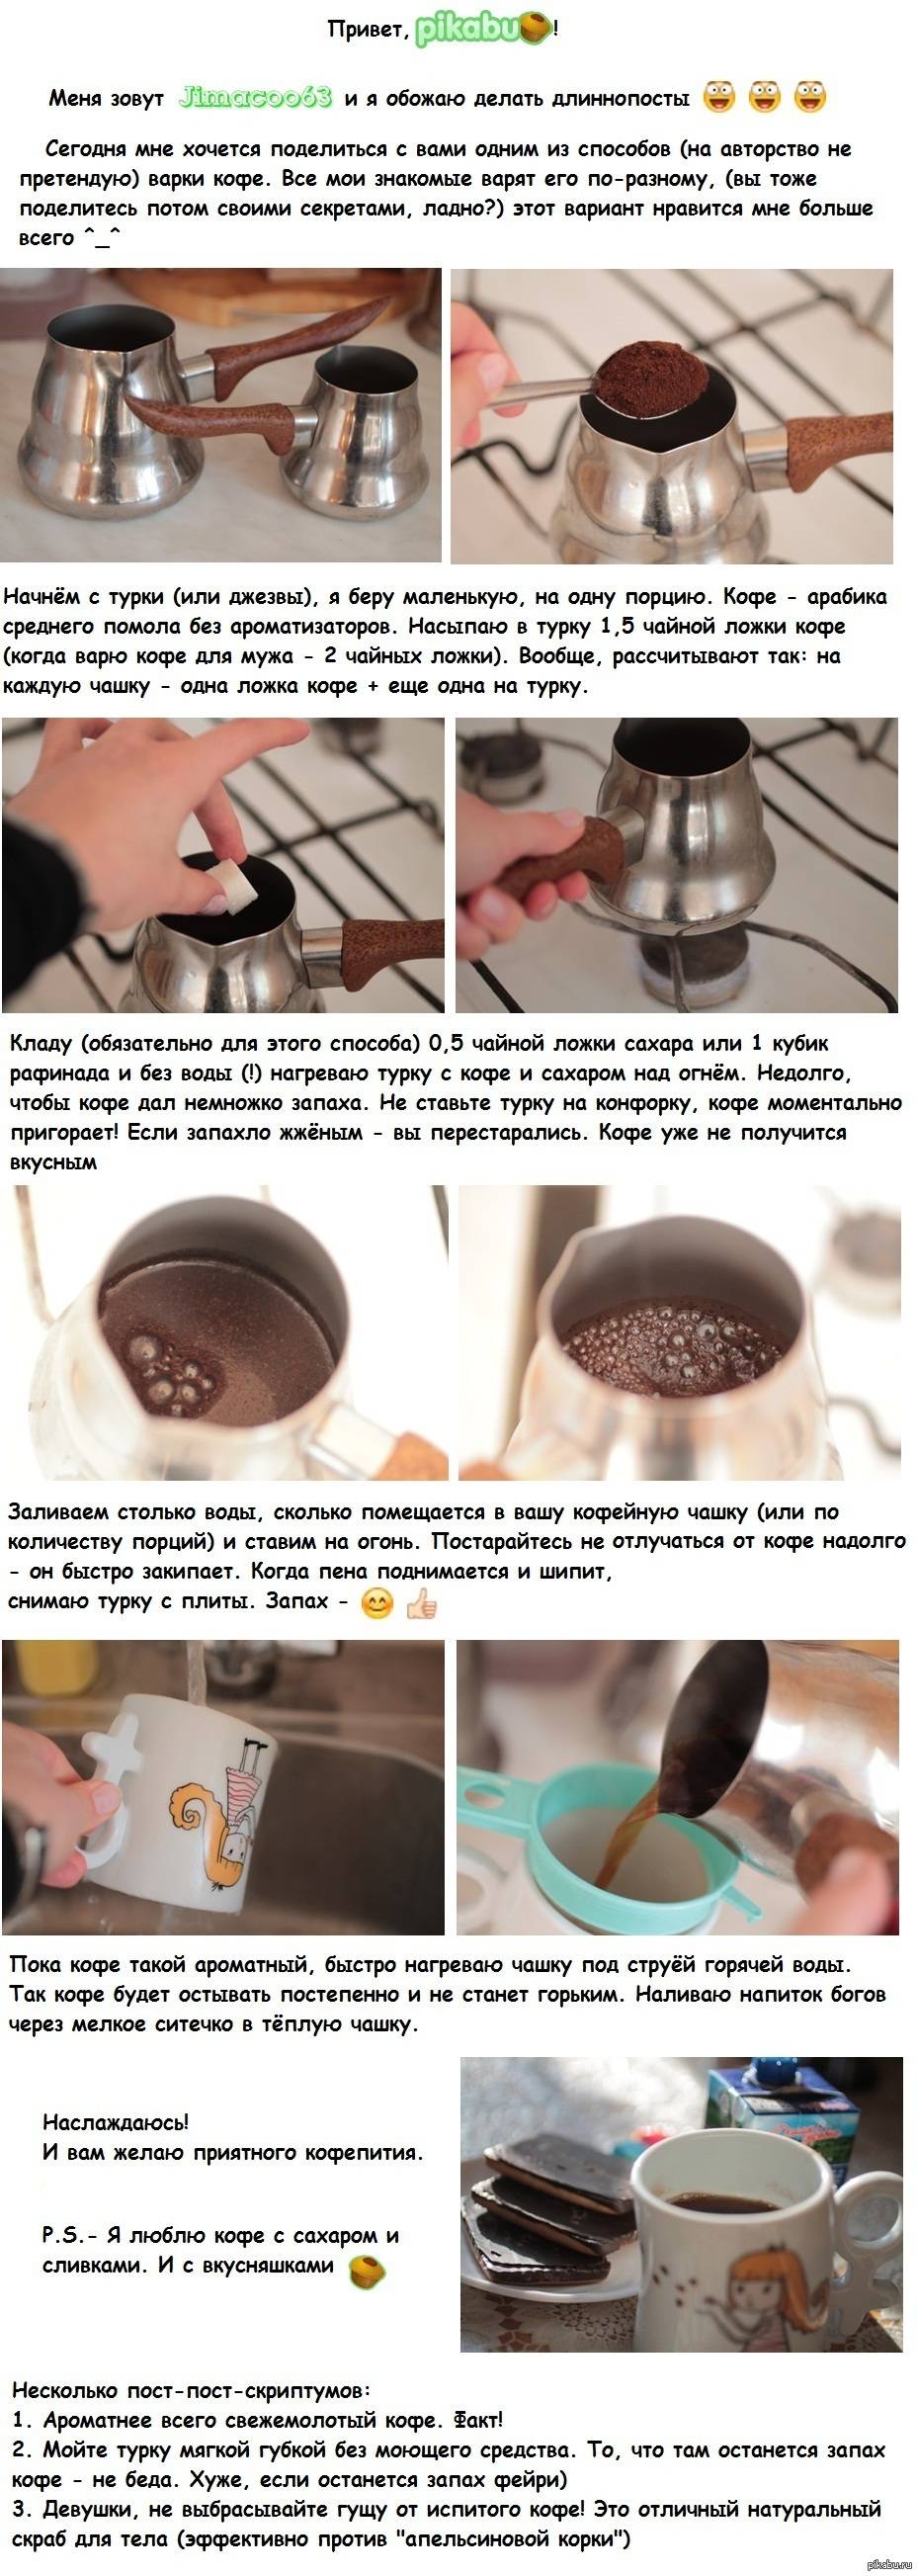 Как варить кофе в кастрюле на плите?